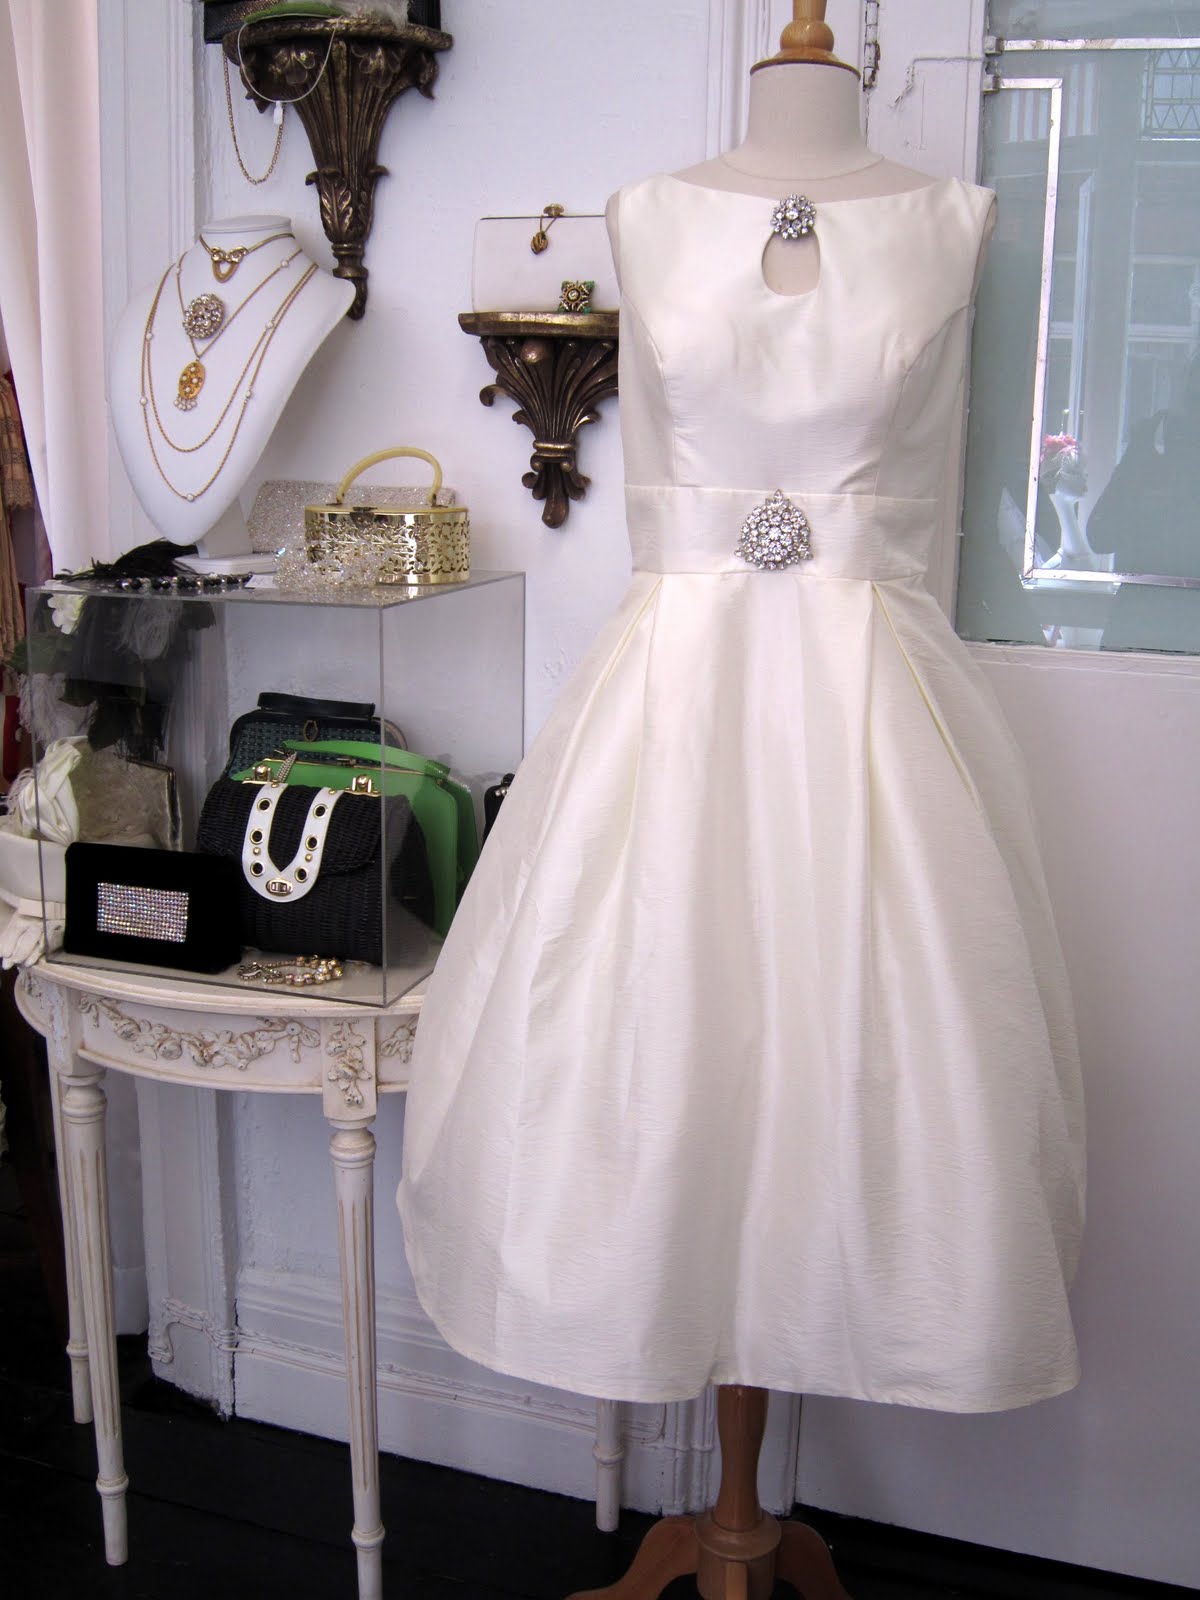 http://2.bp.blogspot.com/-dFyAjQ83ouE/TgnY24airgI/AAAAAAAACaU/hemOUlp7hC8/s1600/1950s+style+silk+ivory+prom+dress.jpg